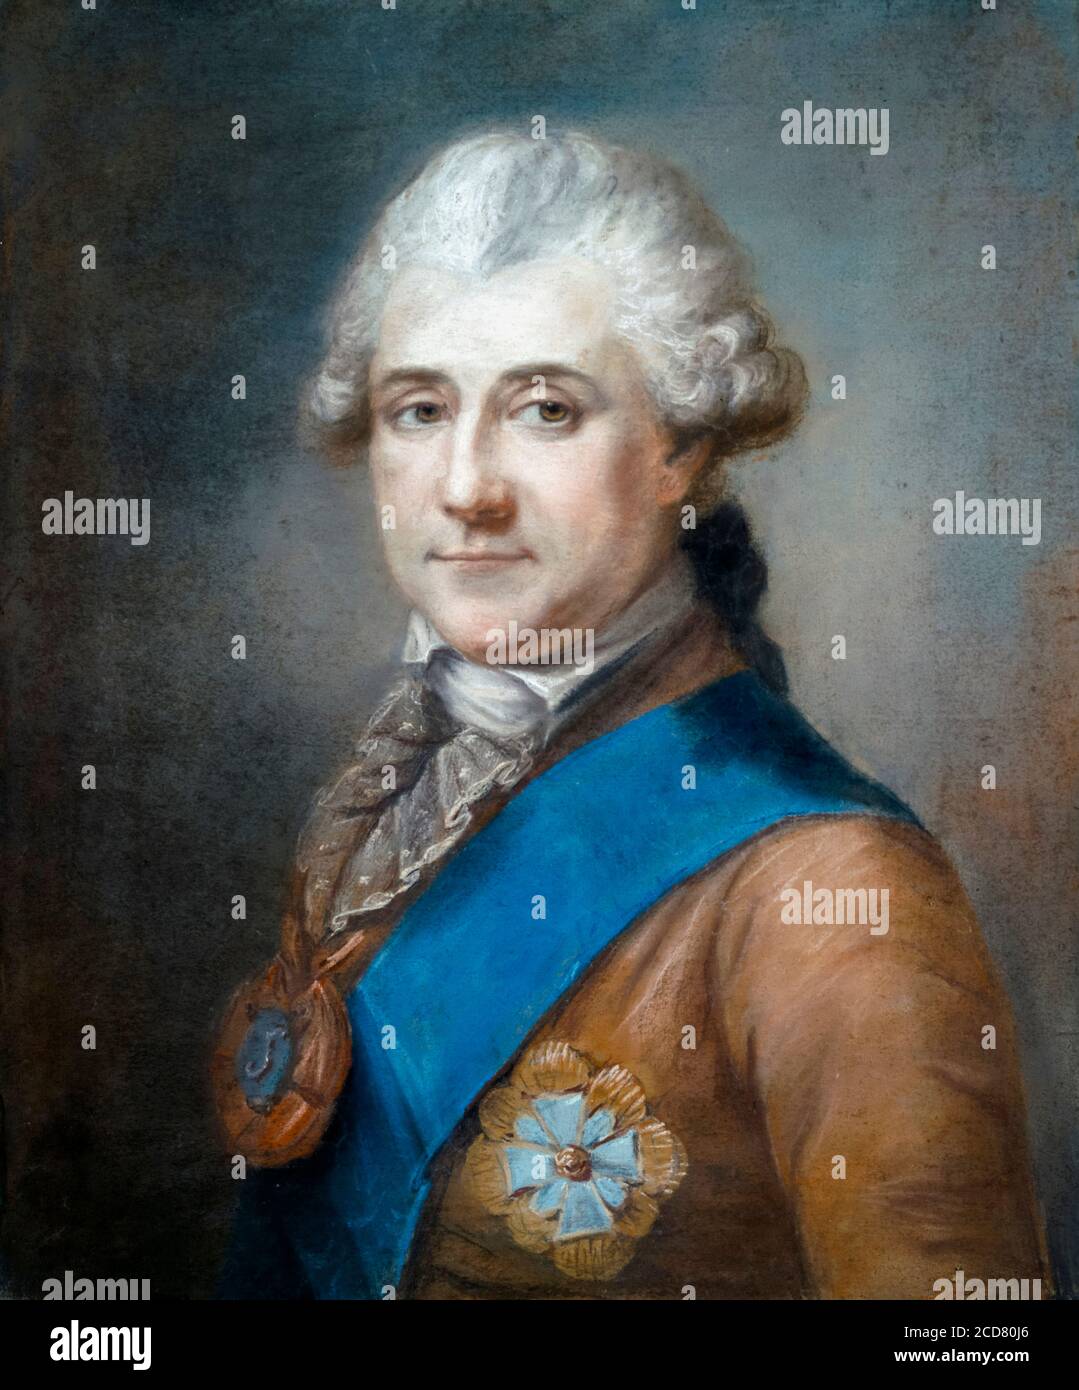 Stanisław II Augustus (1732-1798), King of Poland, portrait drawing by Marcello Bacciarelli, circa 1790 Stock Photo